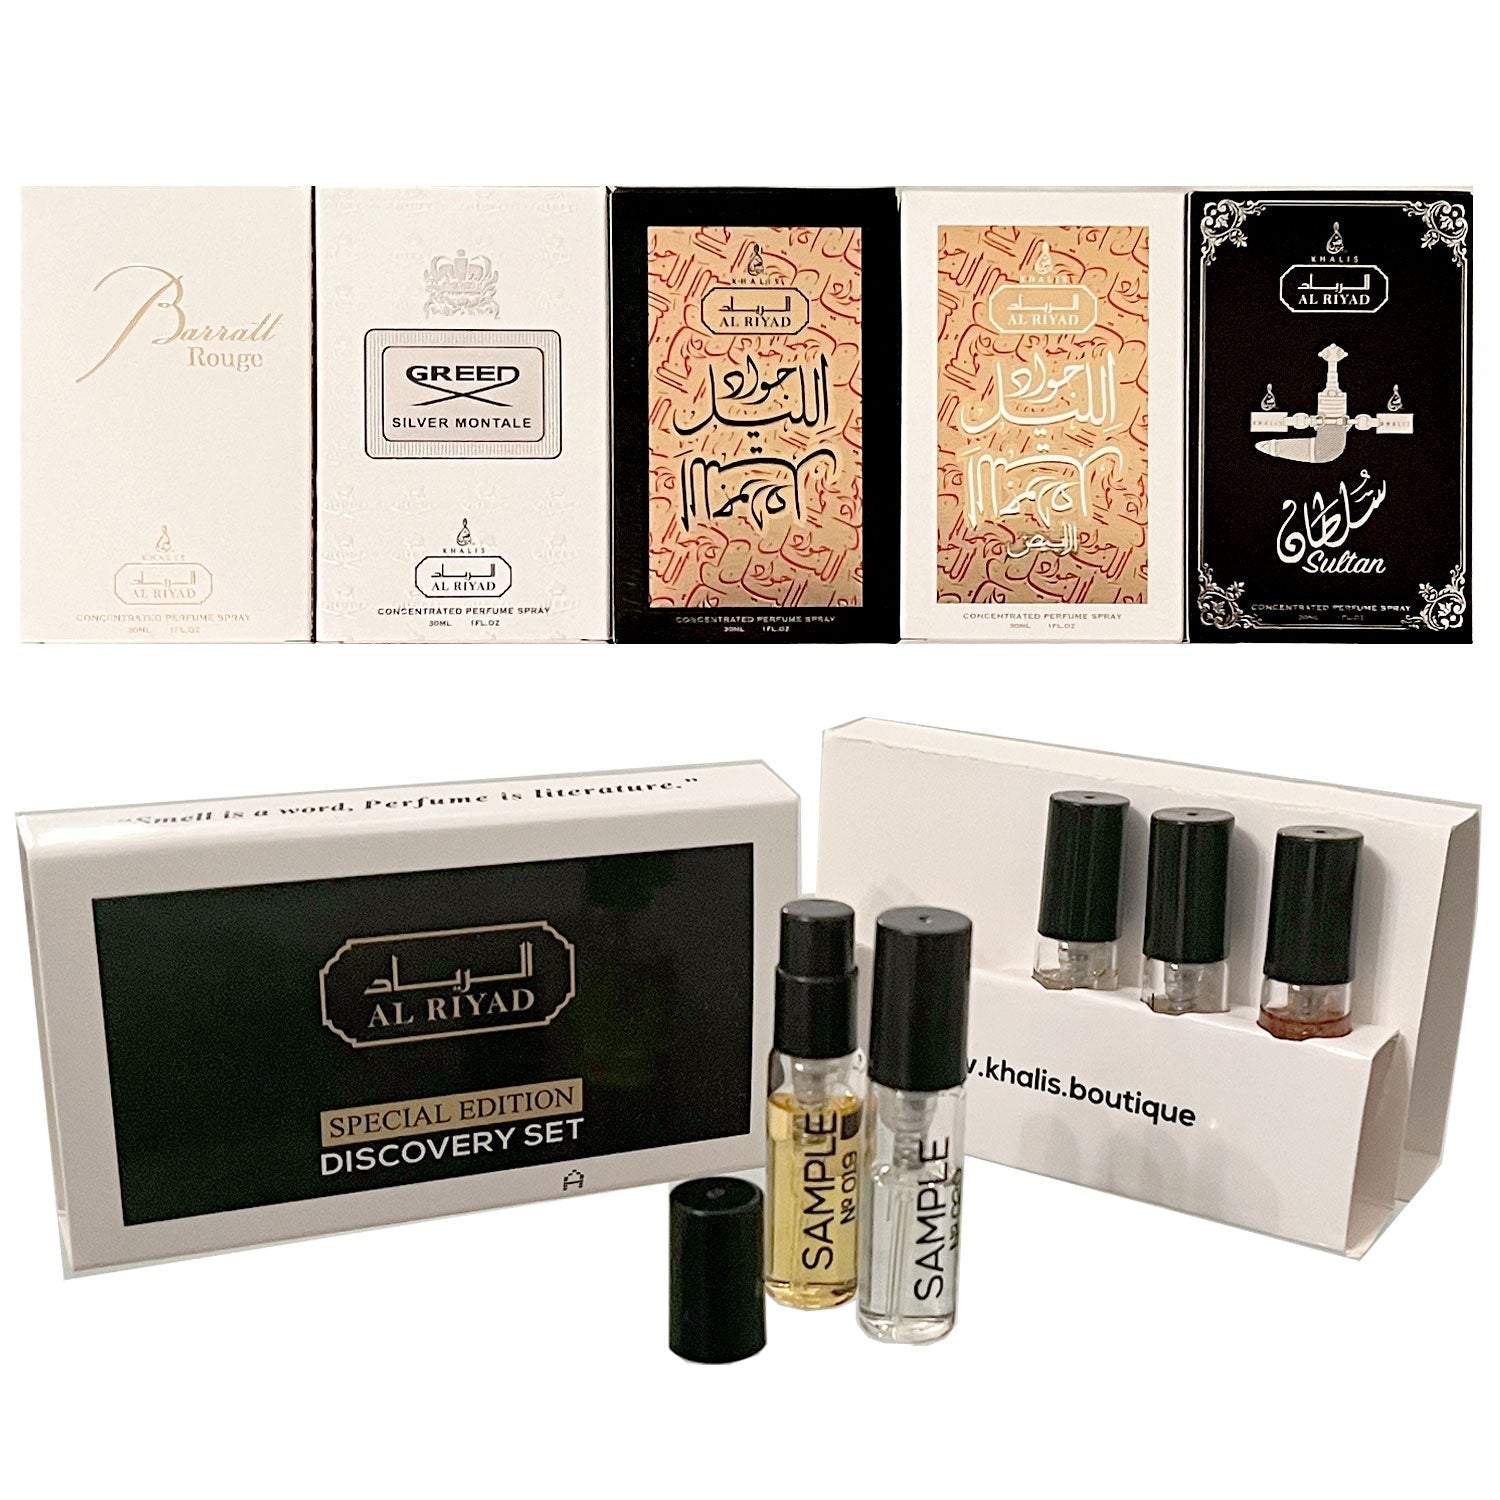 Jawad Al Layl Unisex Oriental Attar (30 mL) Eau De Parfum Spray